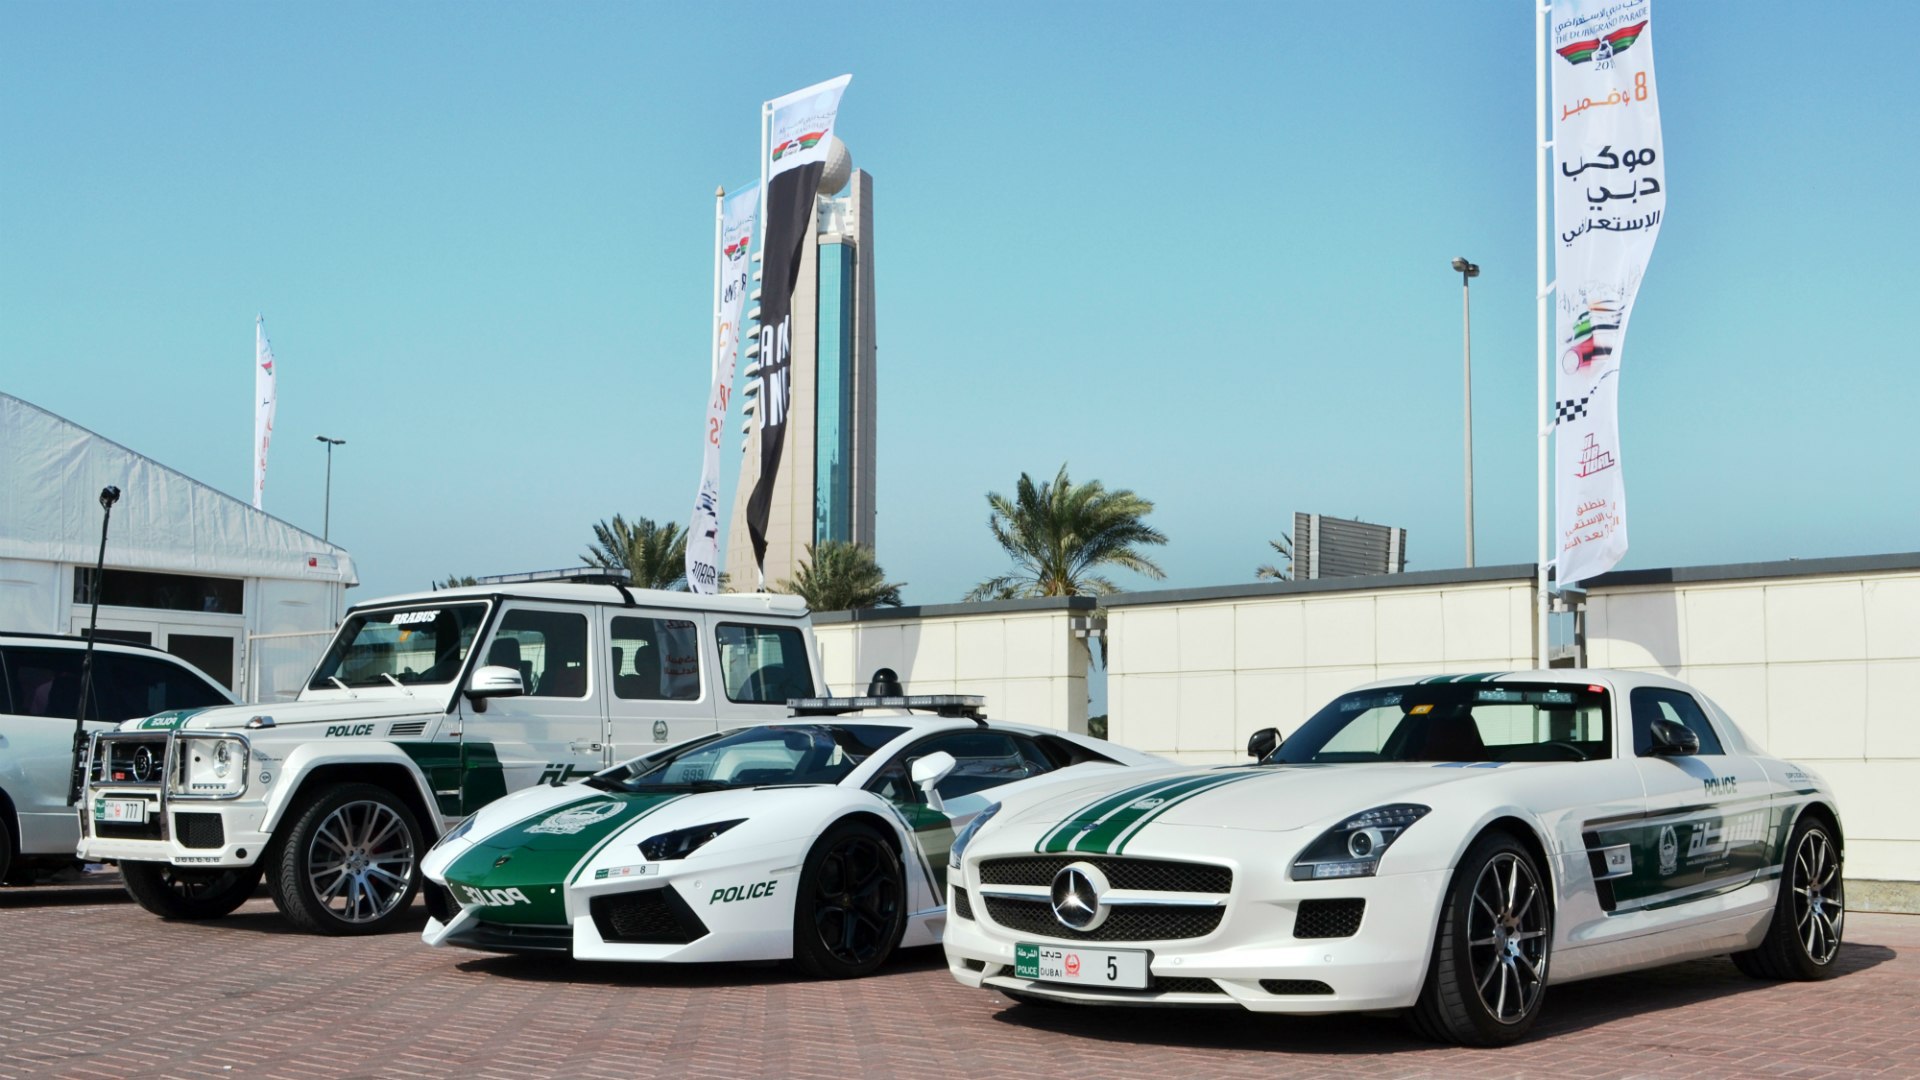 Dubai car wallpaper